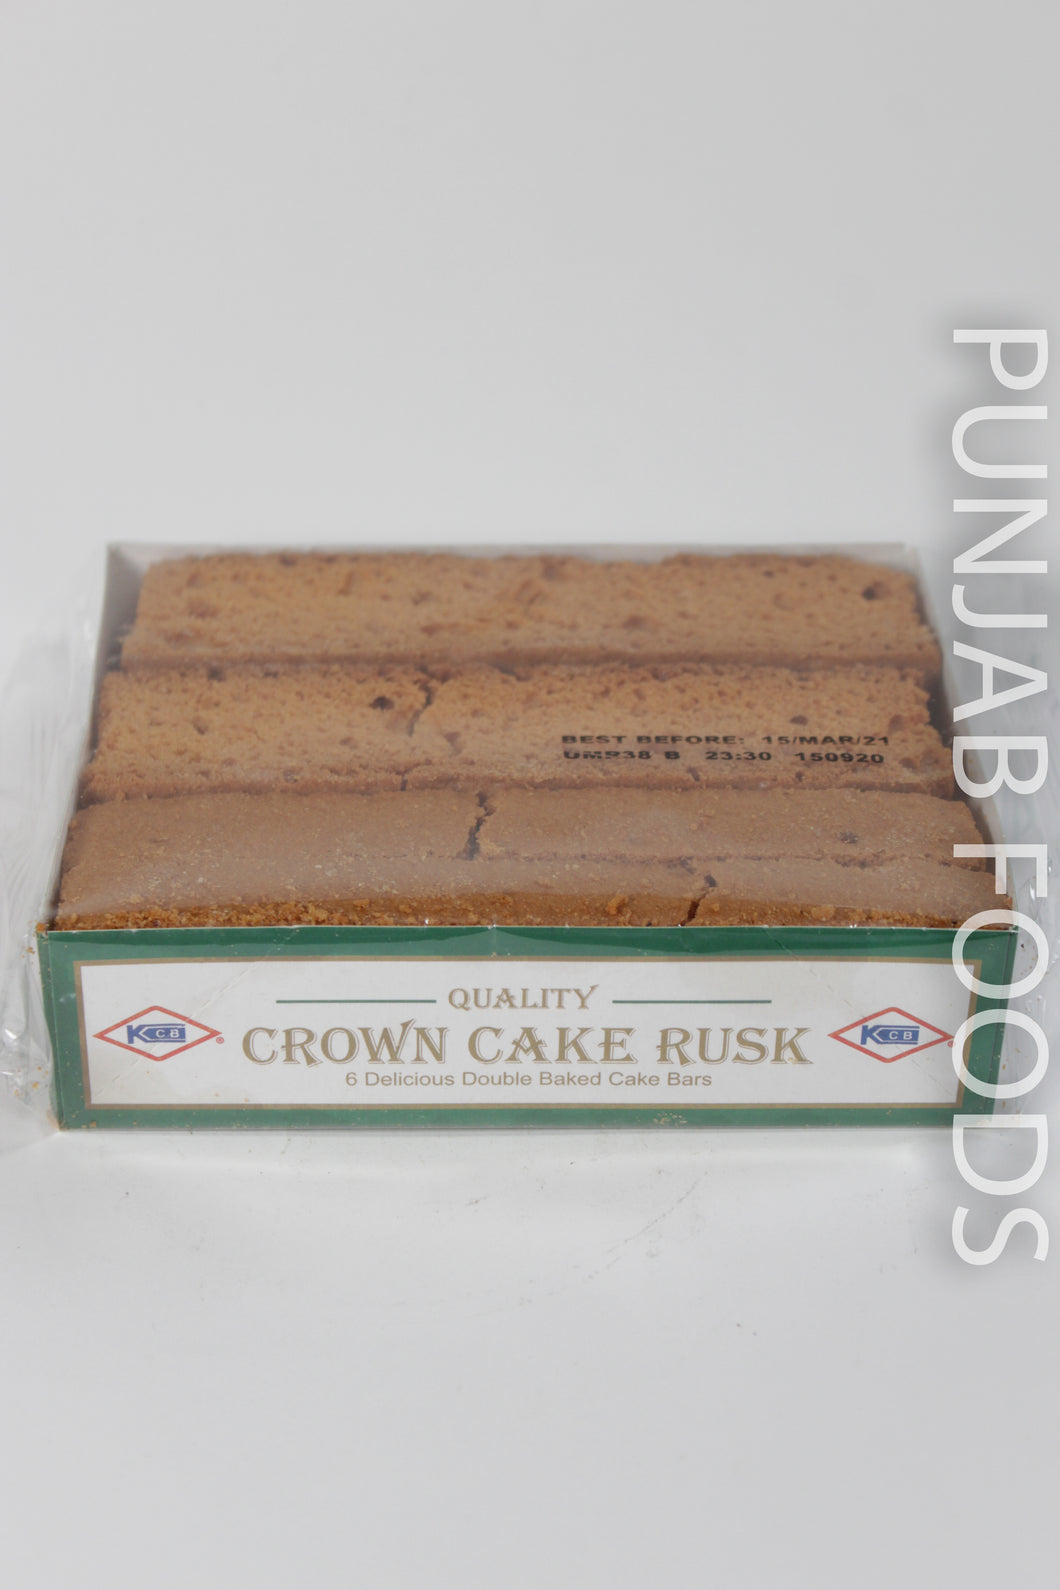 KCB Cake Rusk